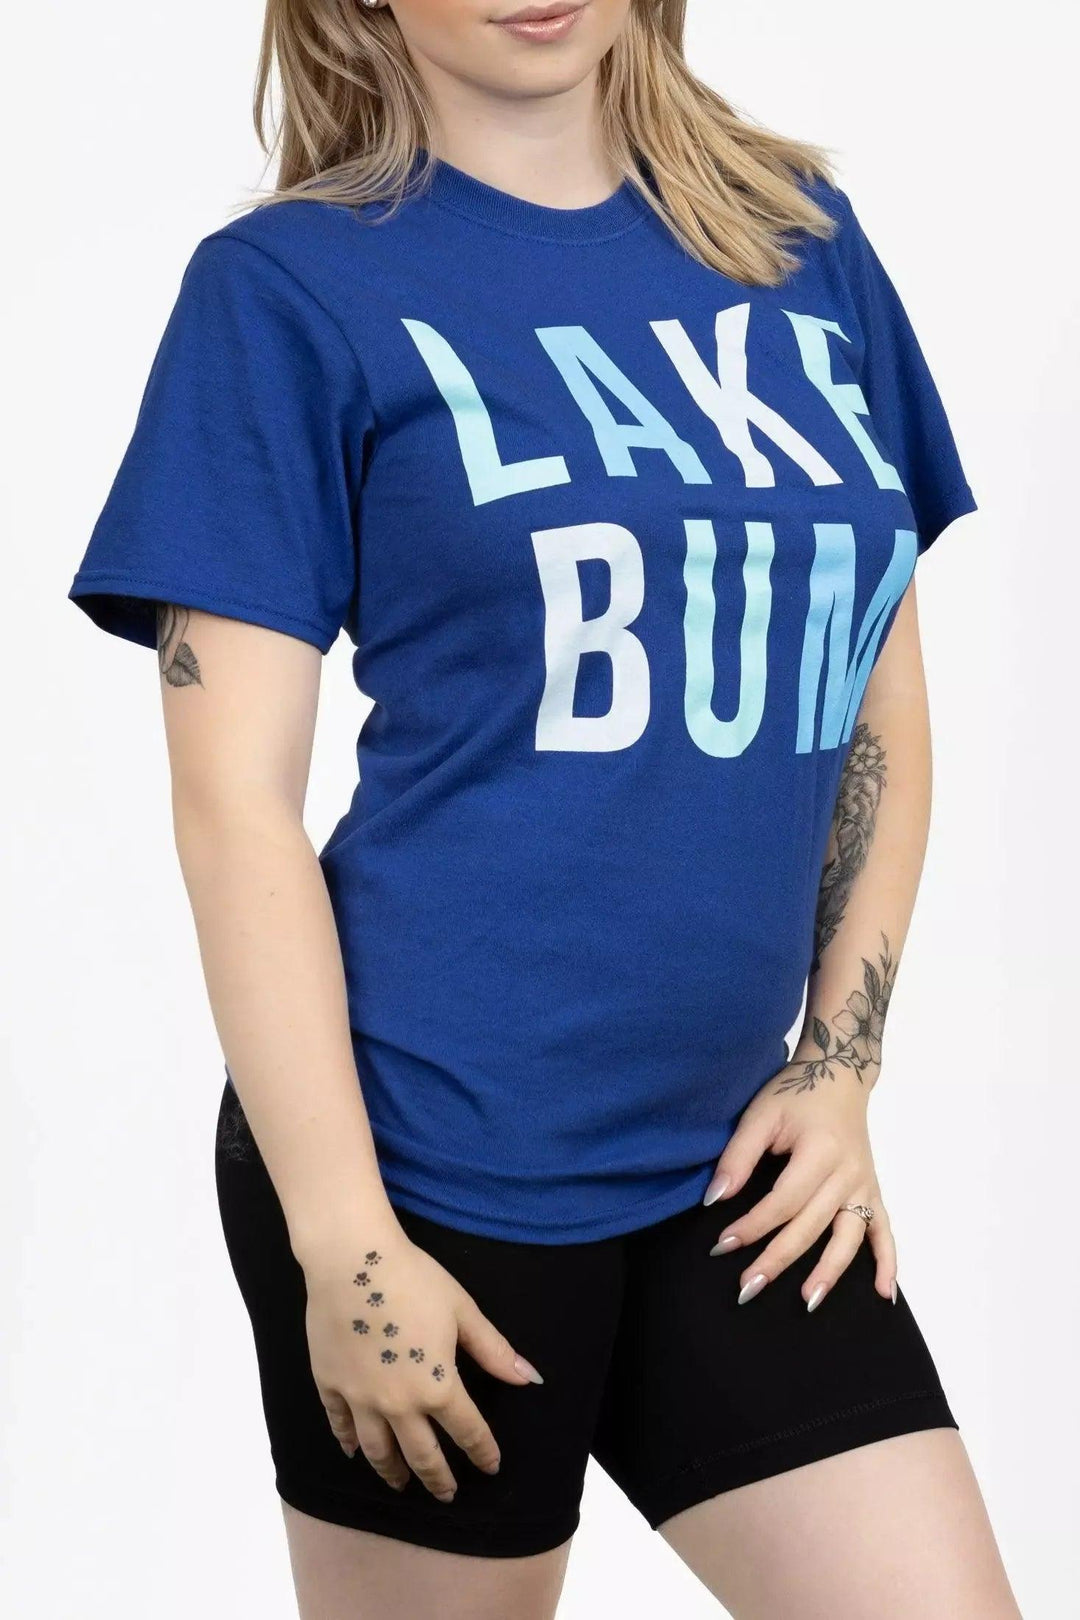 Lake Bum T-Shirt T-Shirt